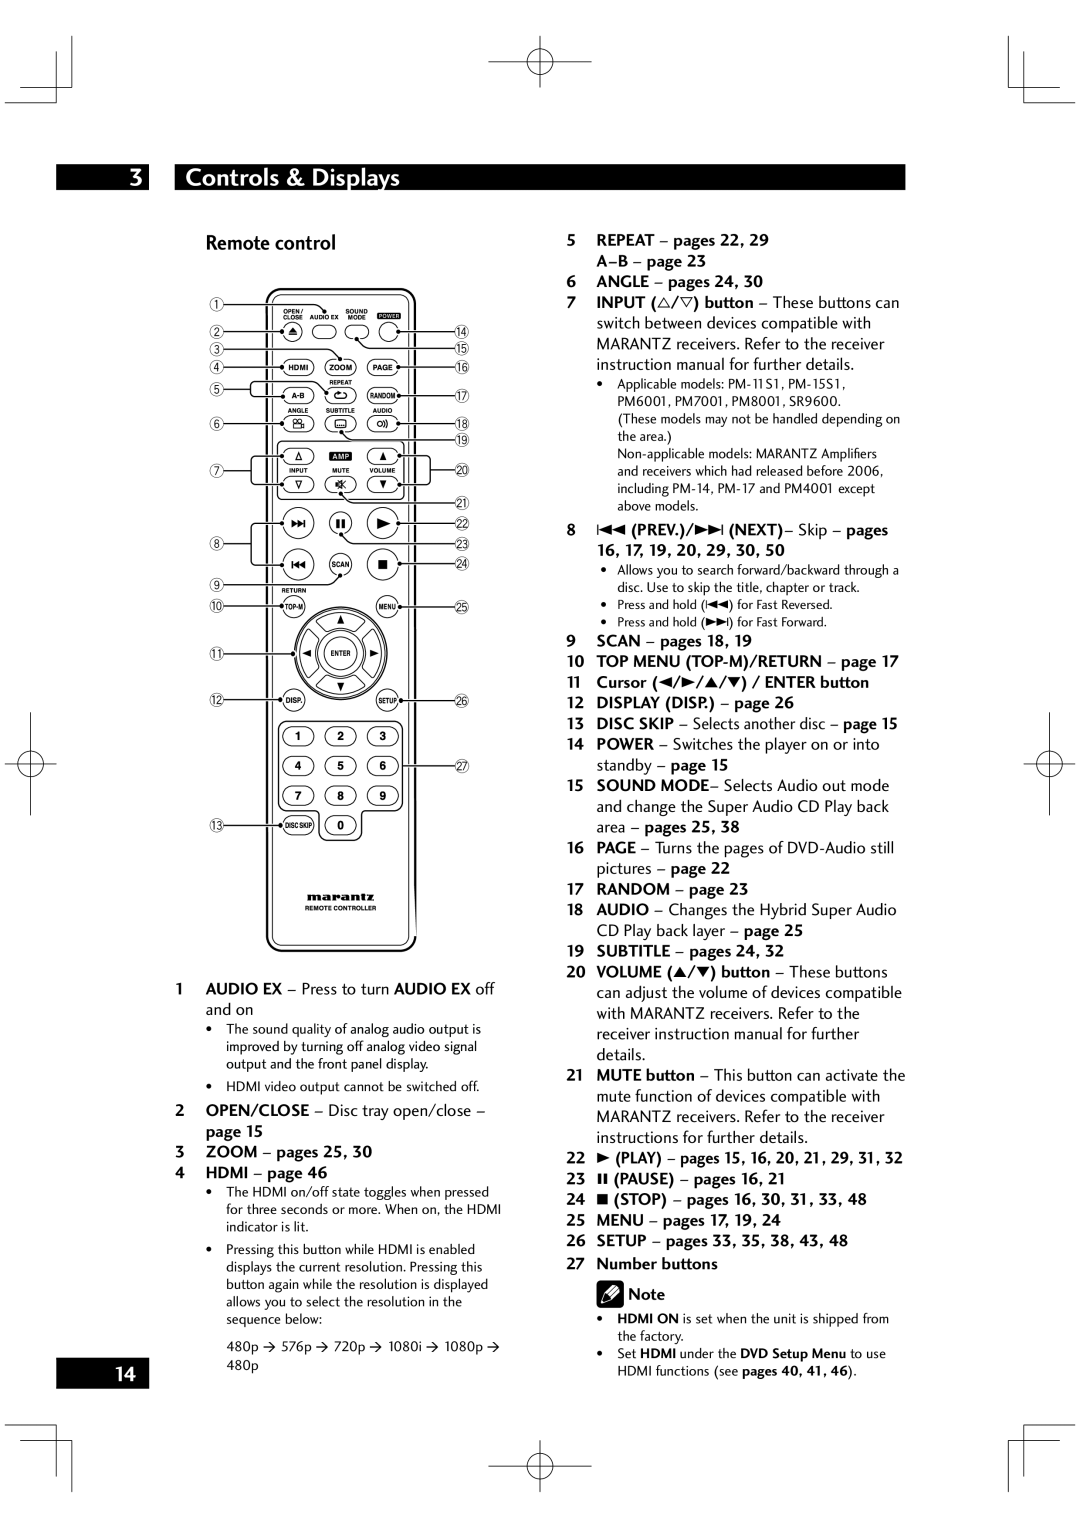 Marantz VC6001 Controls & Displays, Remote control, ZOOM - pages 25 4 HDMI - page, RANDOM - page, SUBTITLE - pages 24 